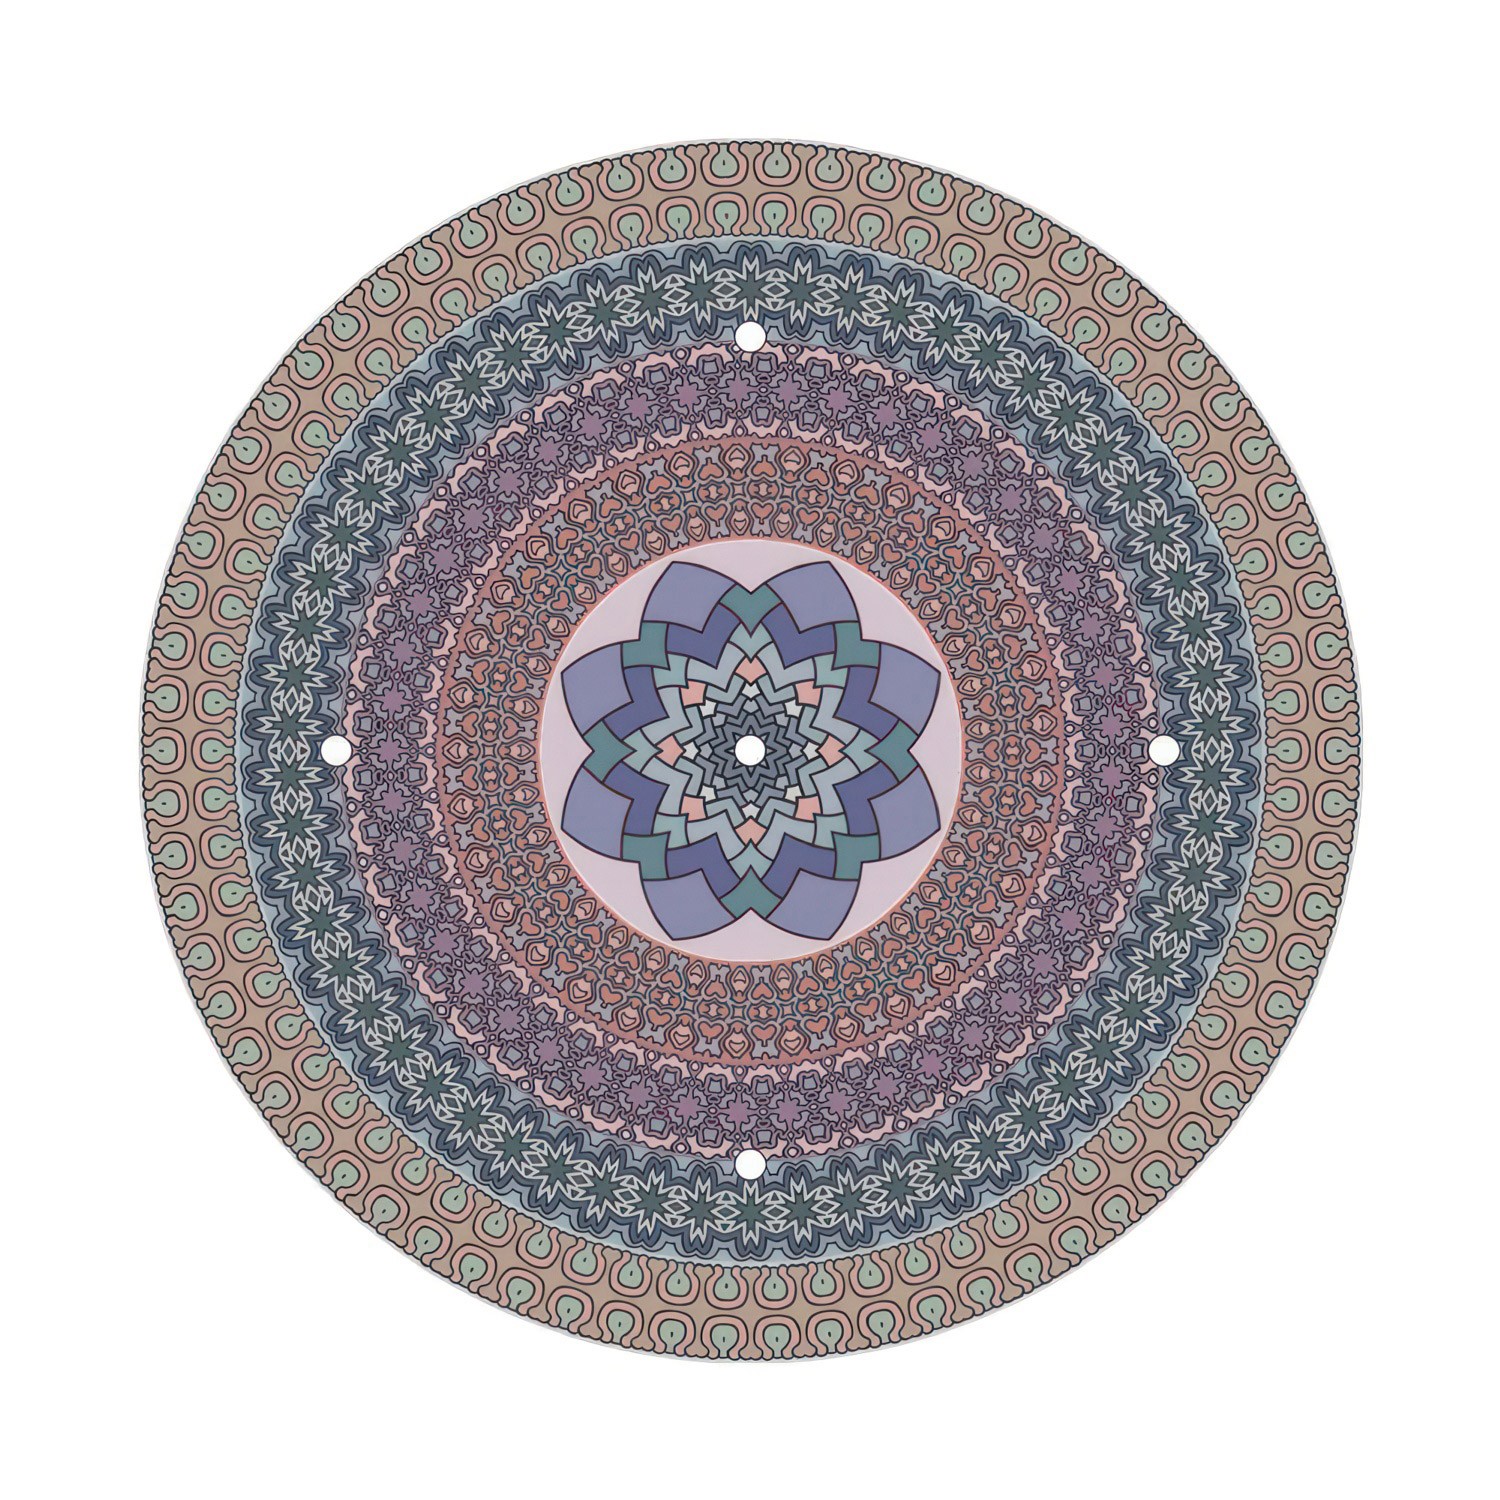 Velika okrugla dekoracija za stropnu rozetu 400 mm - Rose-One sistem s 5 rupa i 4 bočne rupe - PROMO